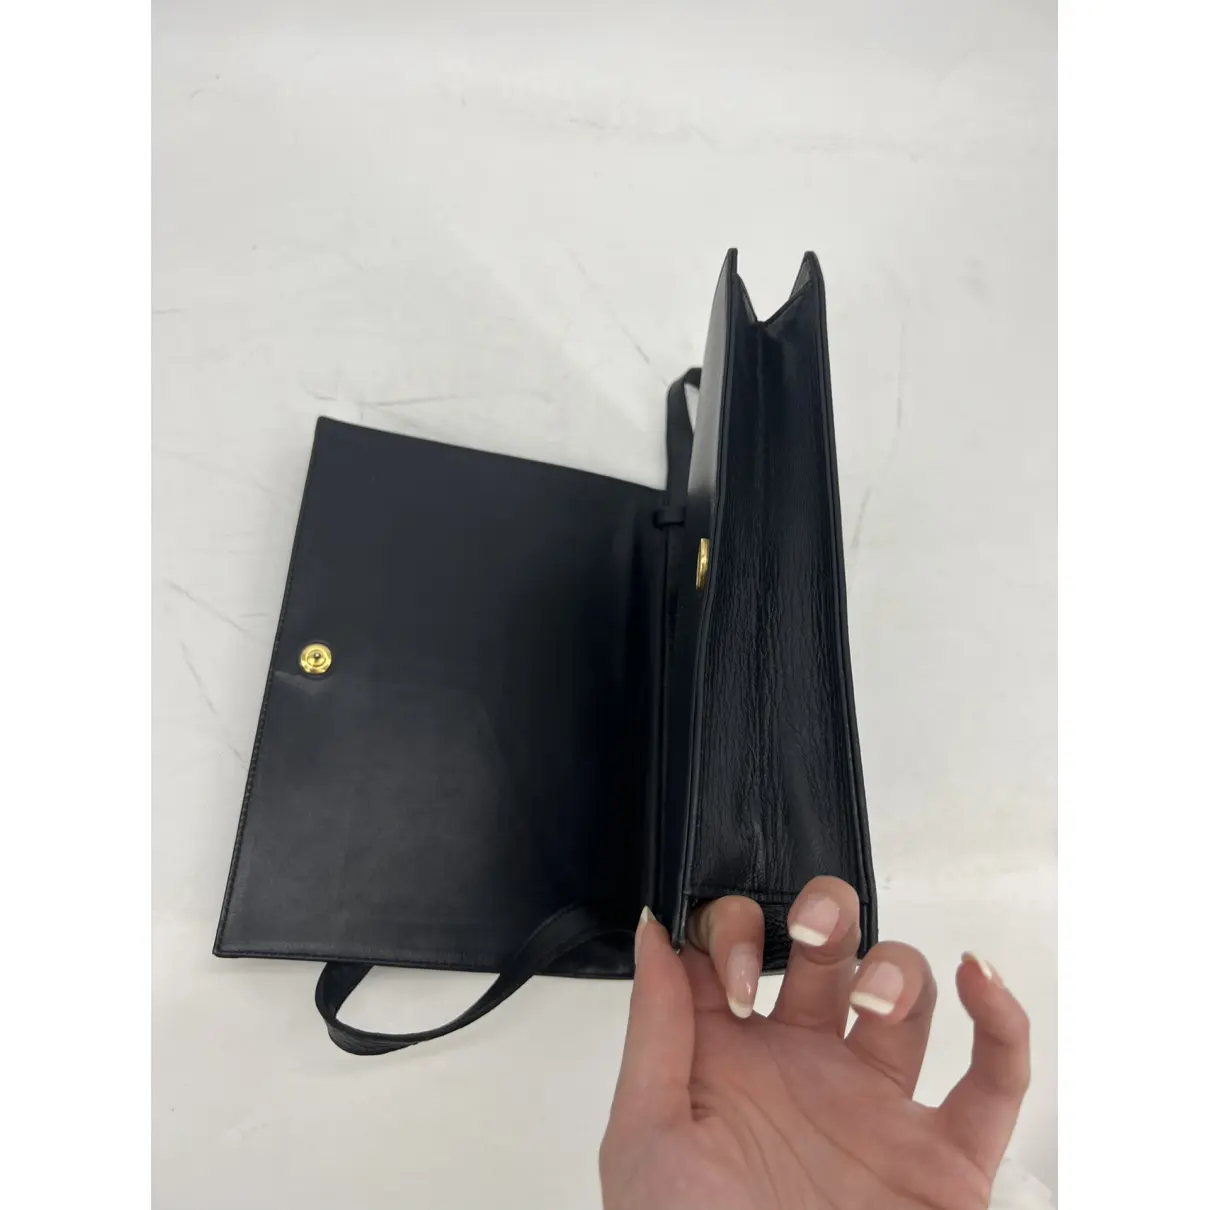 Buy Yves Saint Laurent Leather handbag online - Vintage